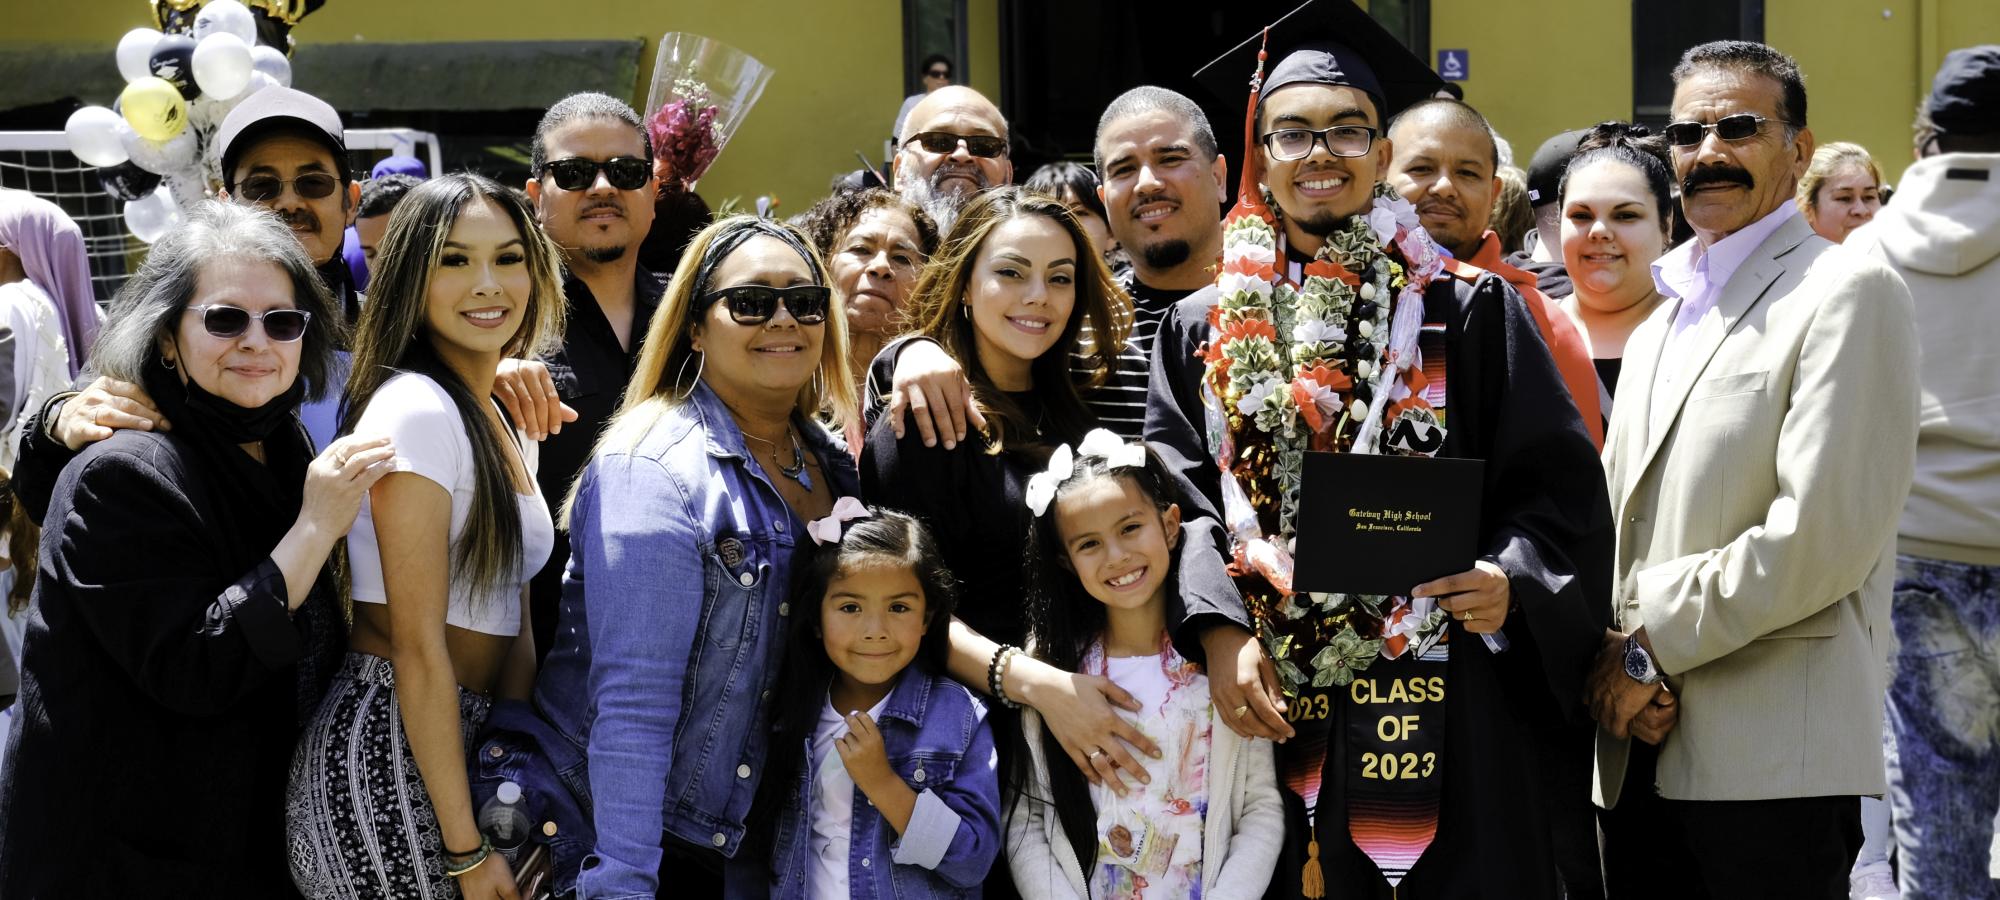 A family celebrates graduation